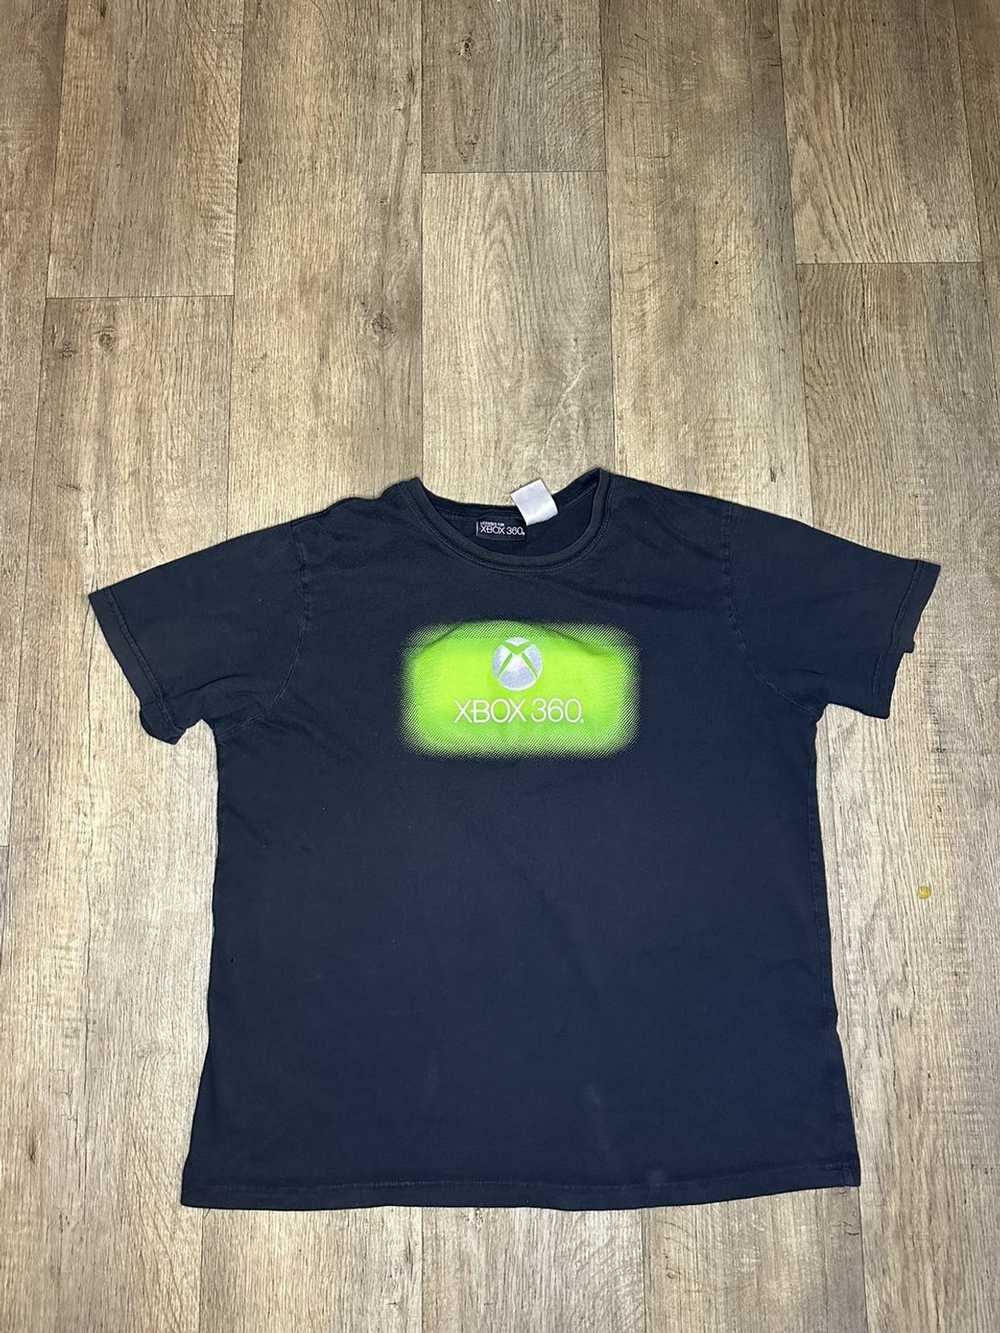 Xbox 360 09 Xbox 360 T Shirt - image 1